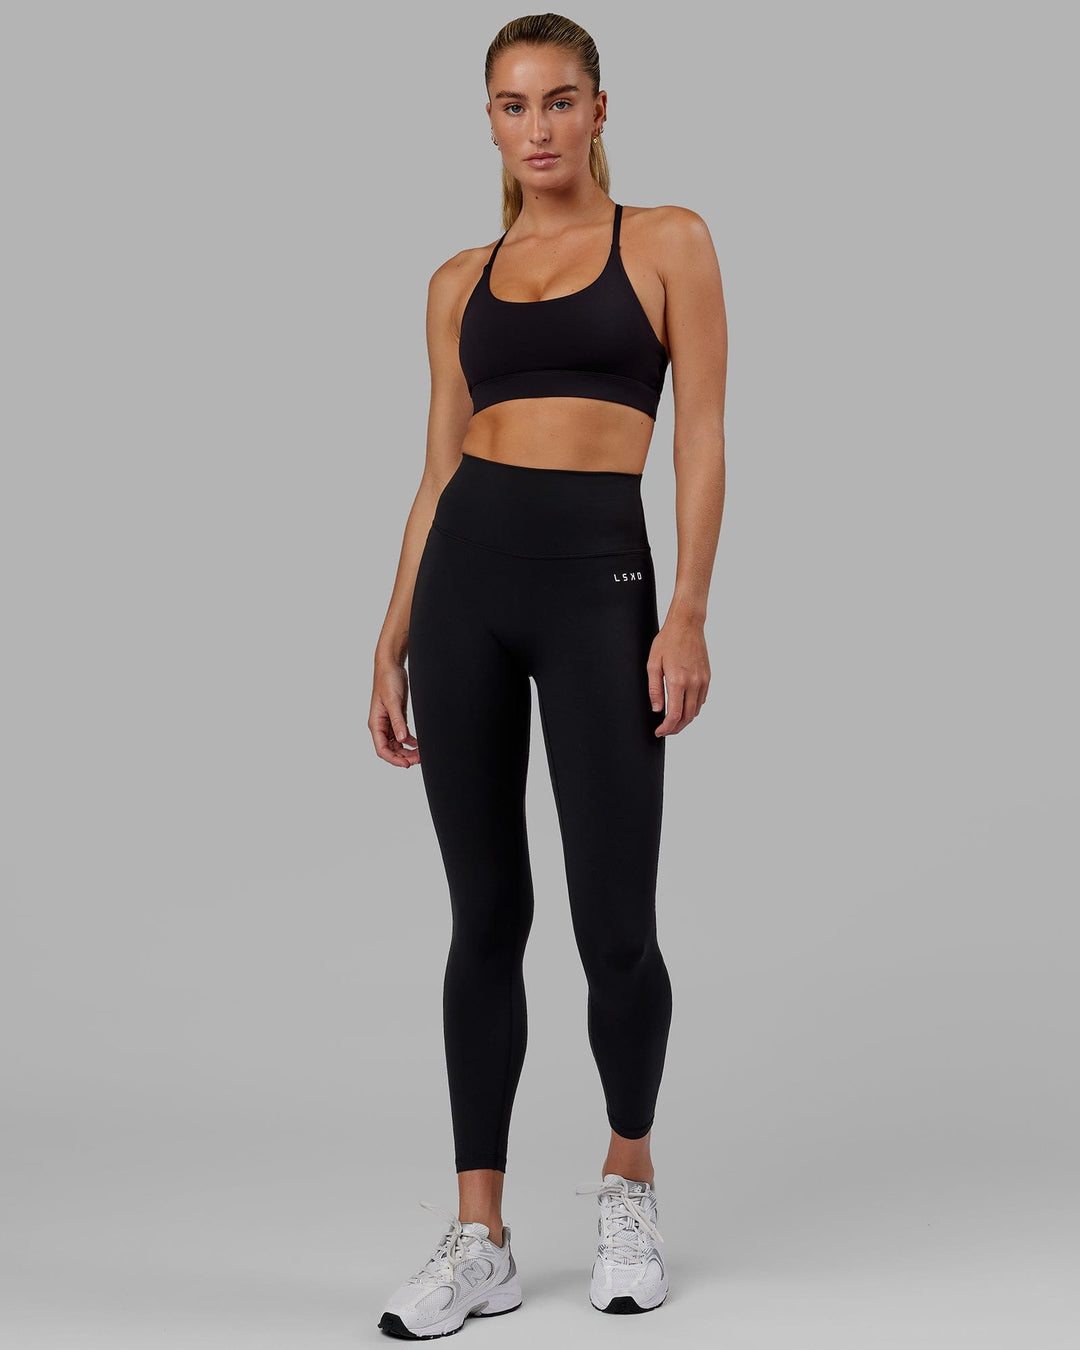 Woman wearing Base 2.0 Full Length Tight - Black